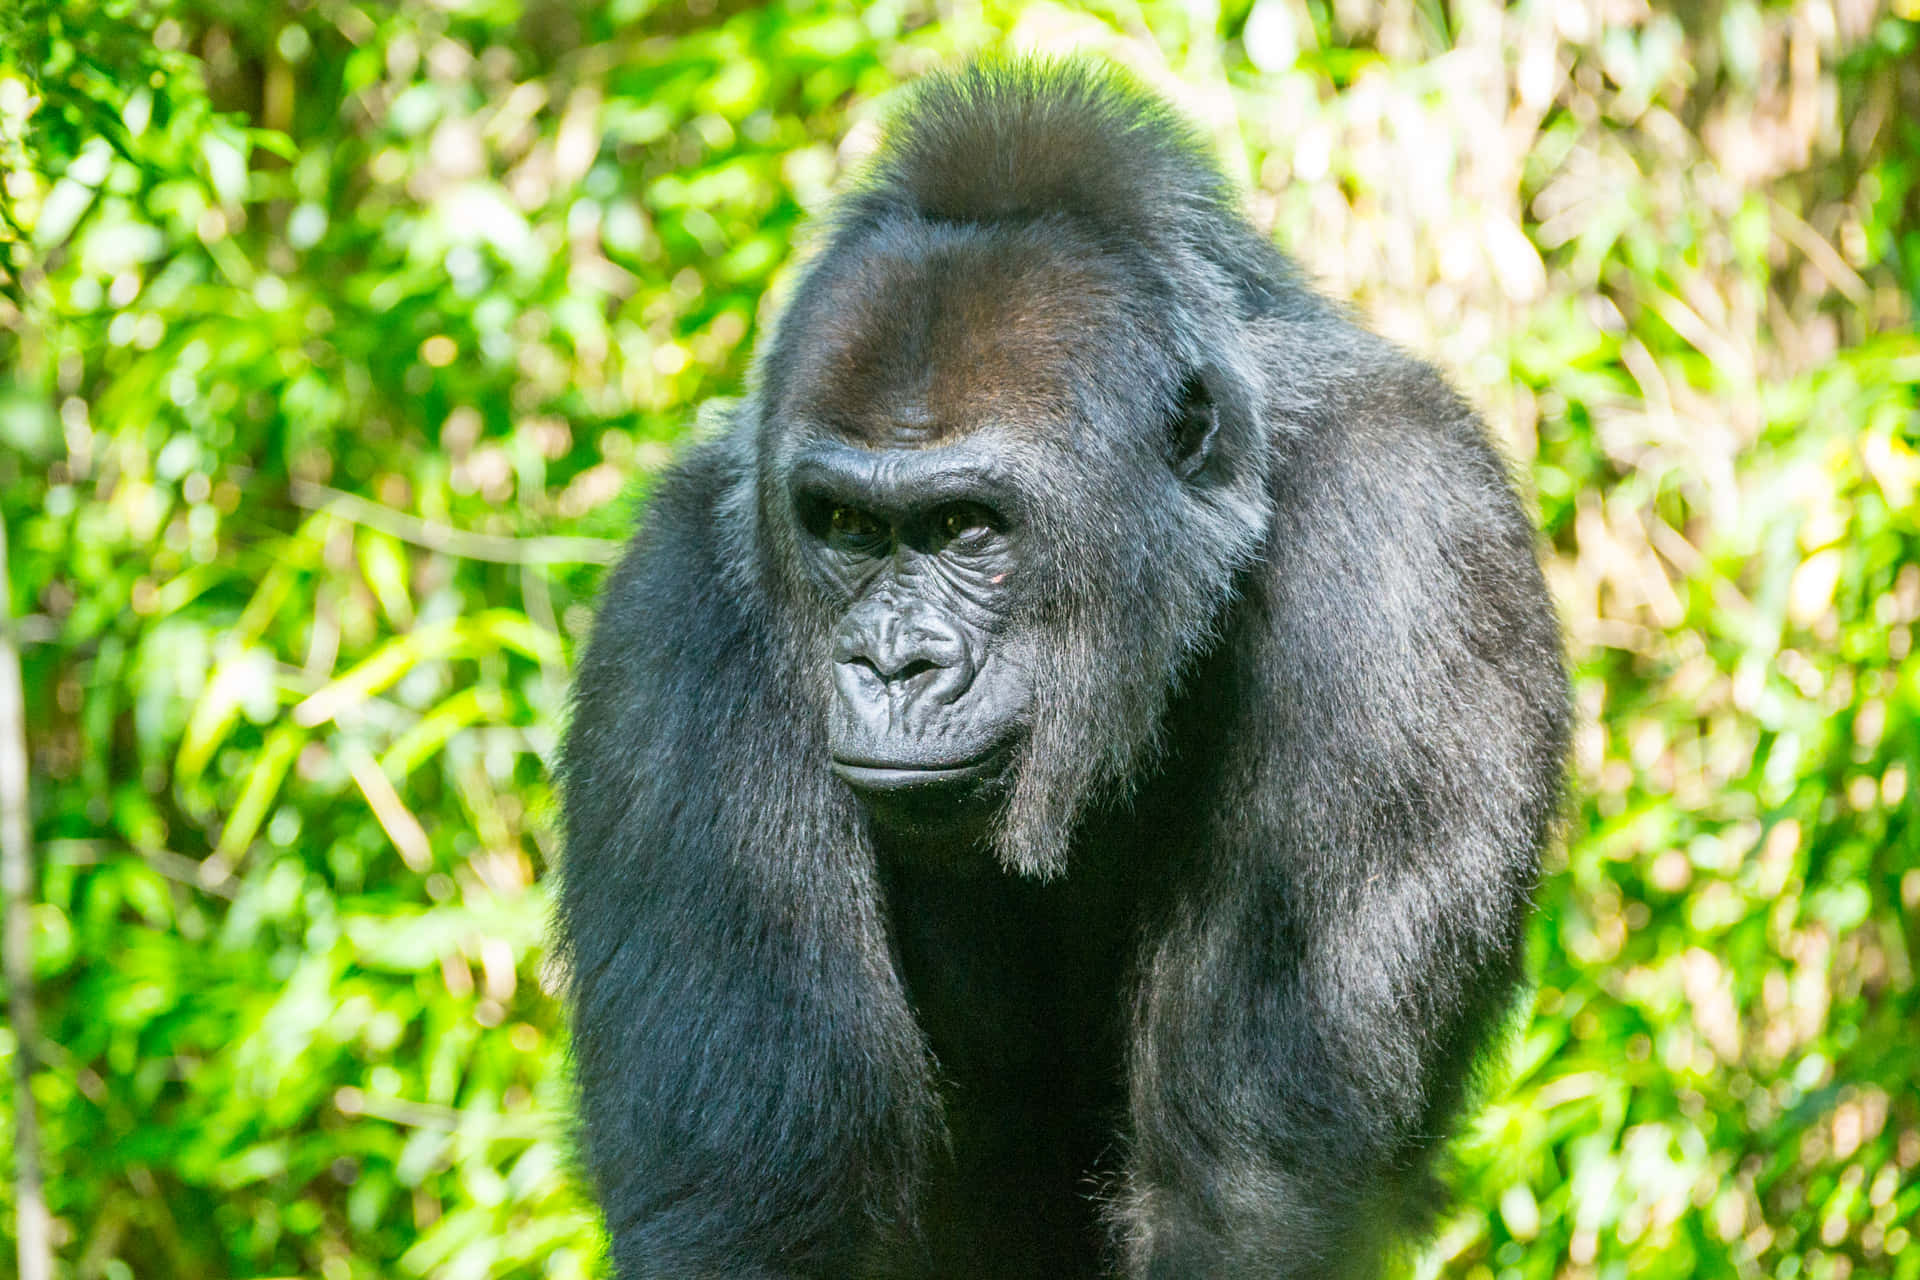 A Gorilla in Captivity